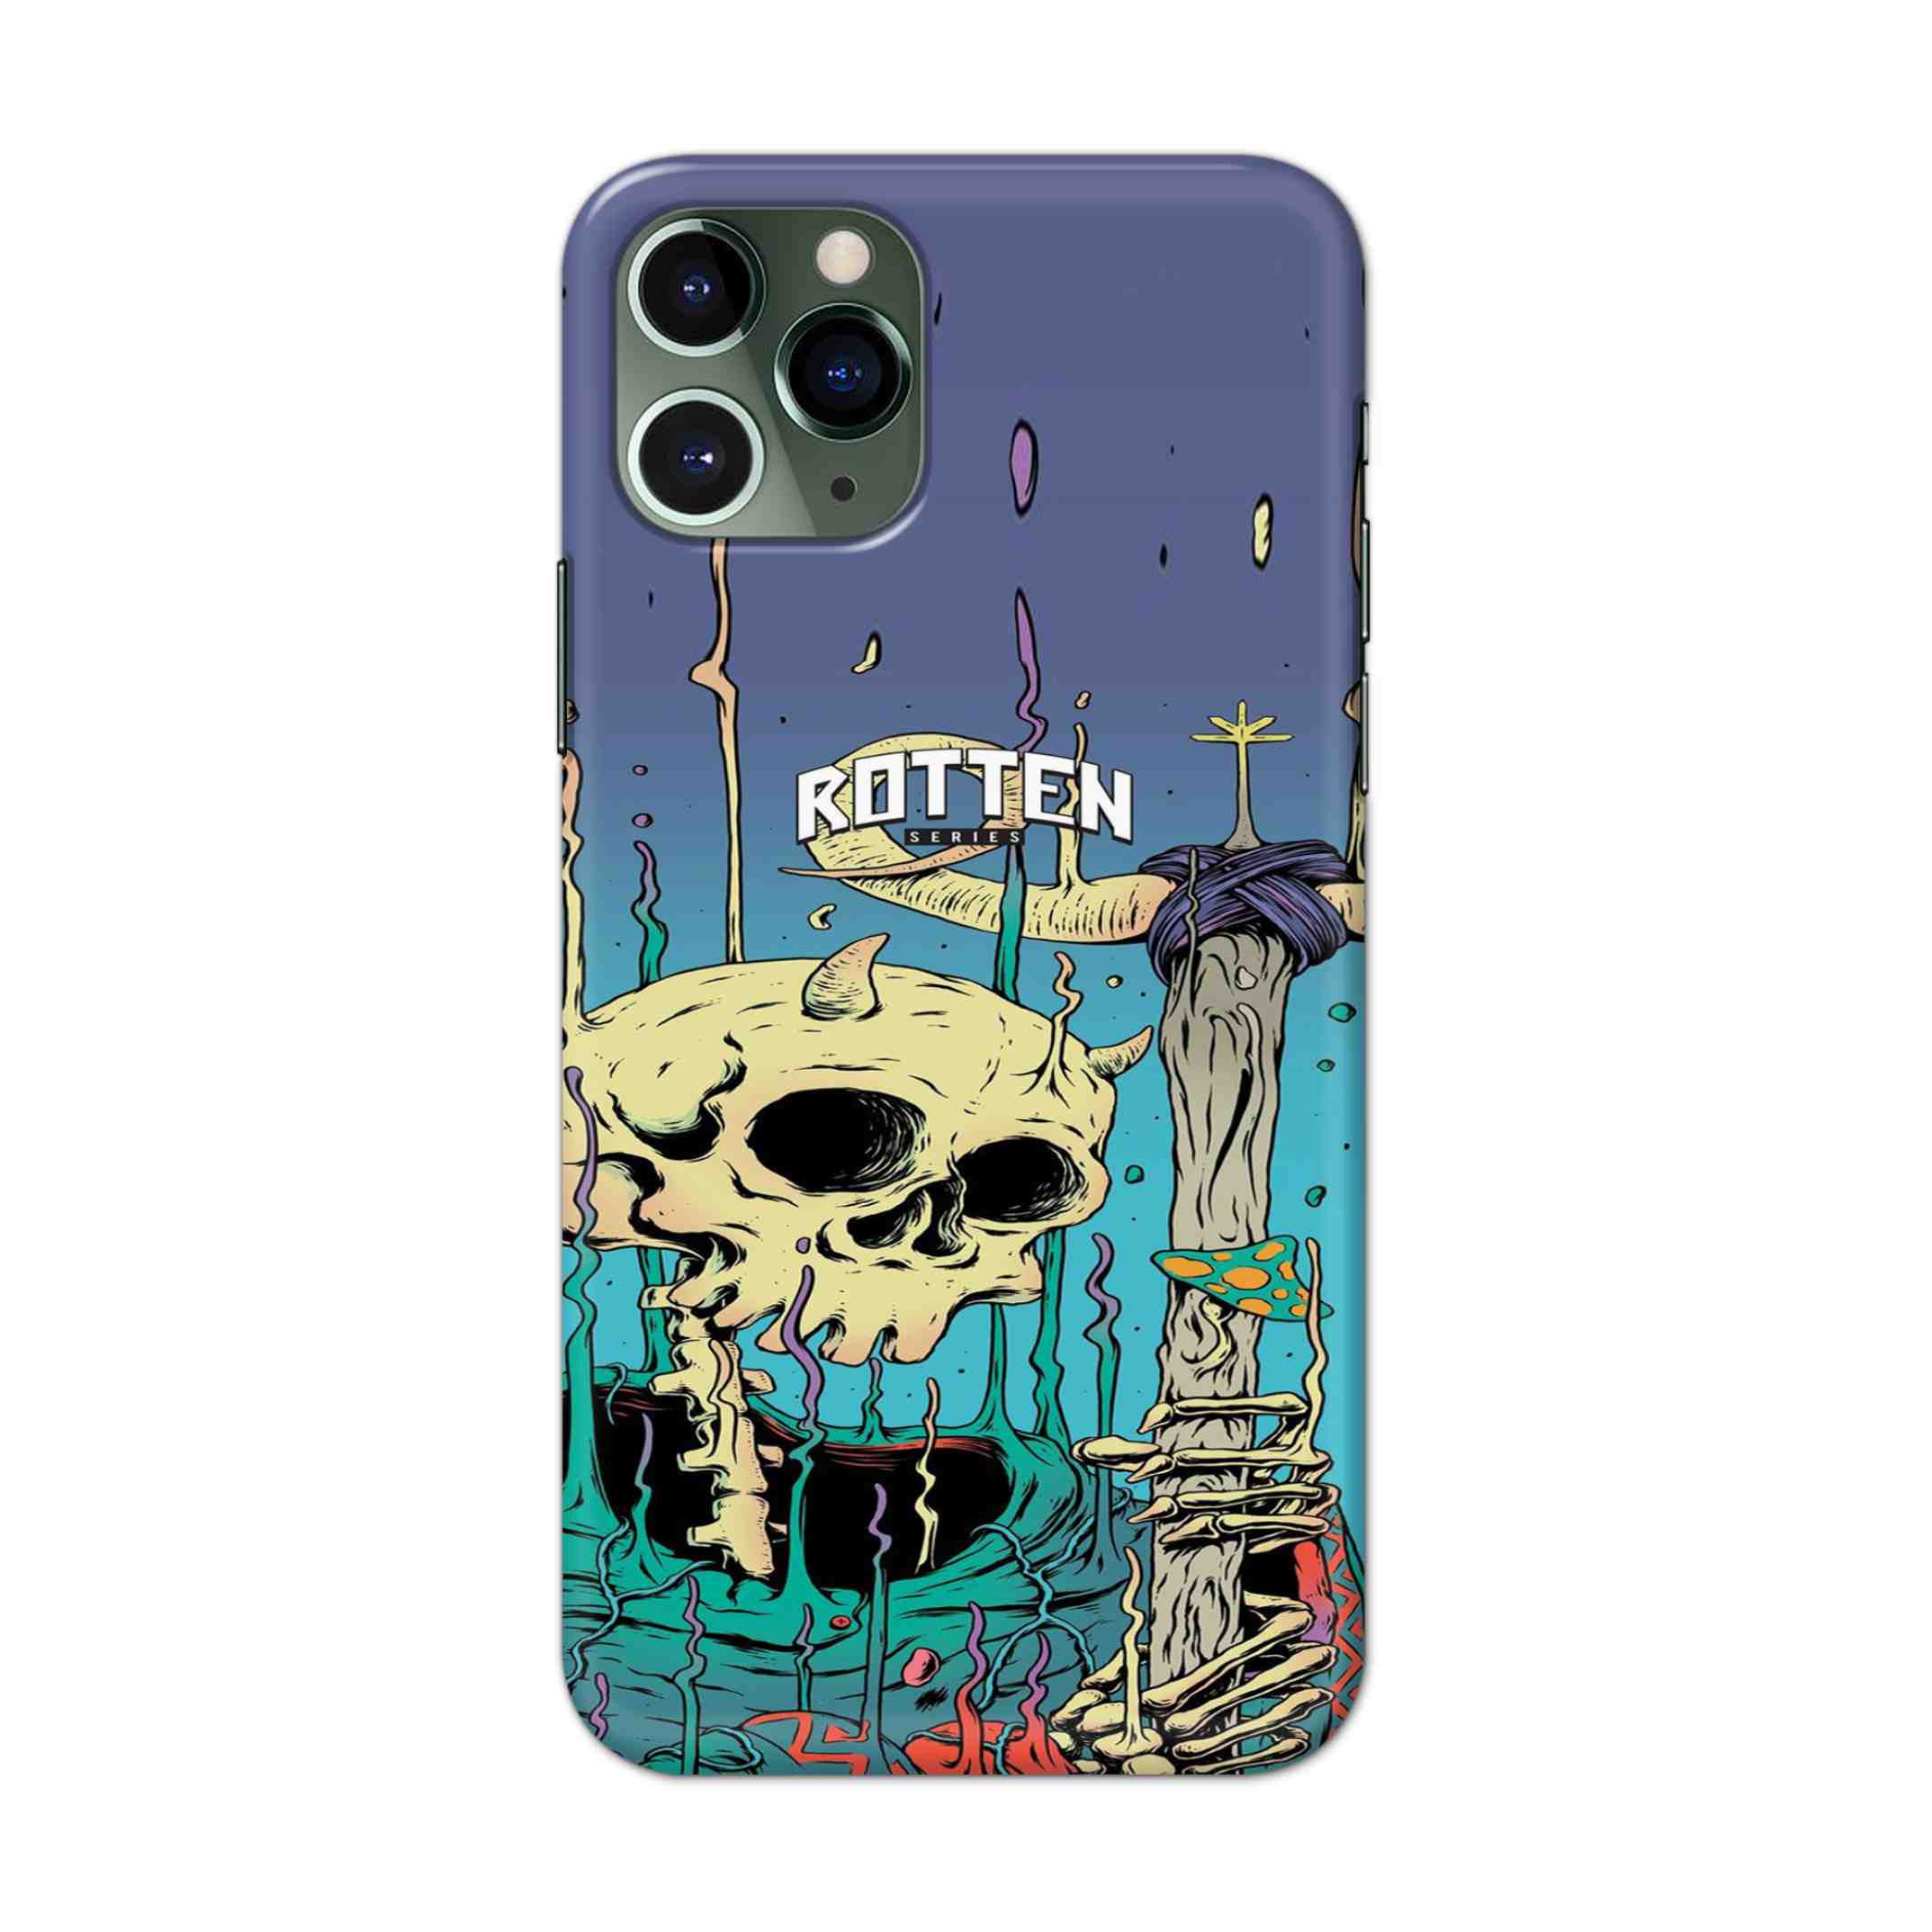 Buy Skull Hard Back Mobile Phone Case/Cover For iPhone 11 Pro Online